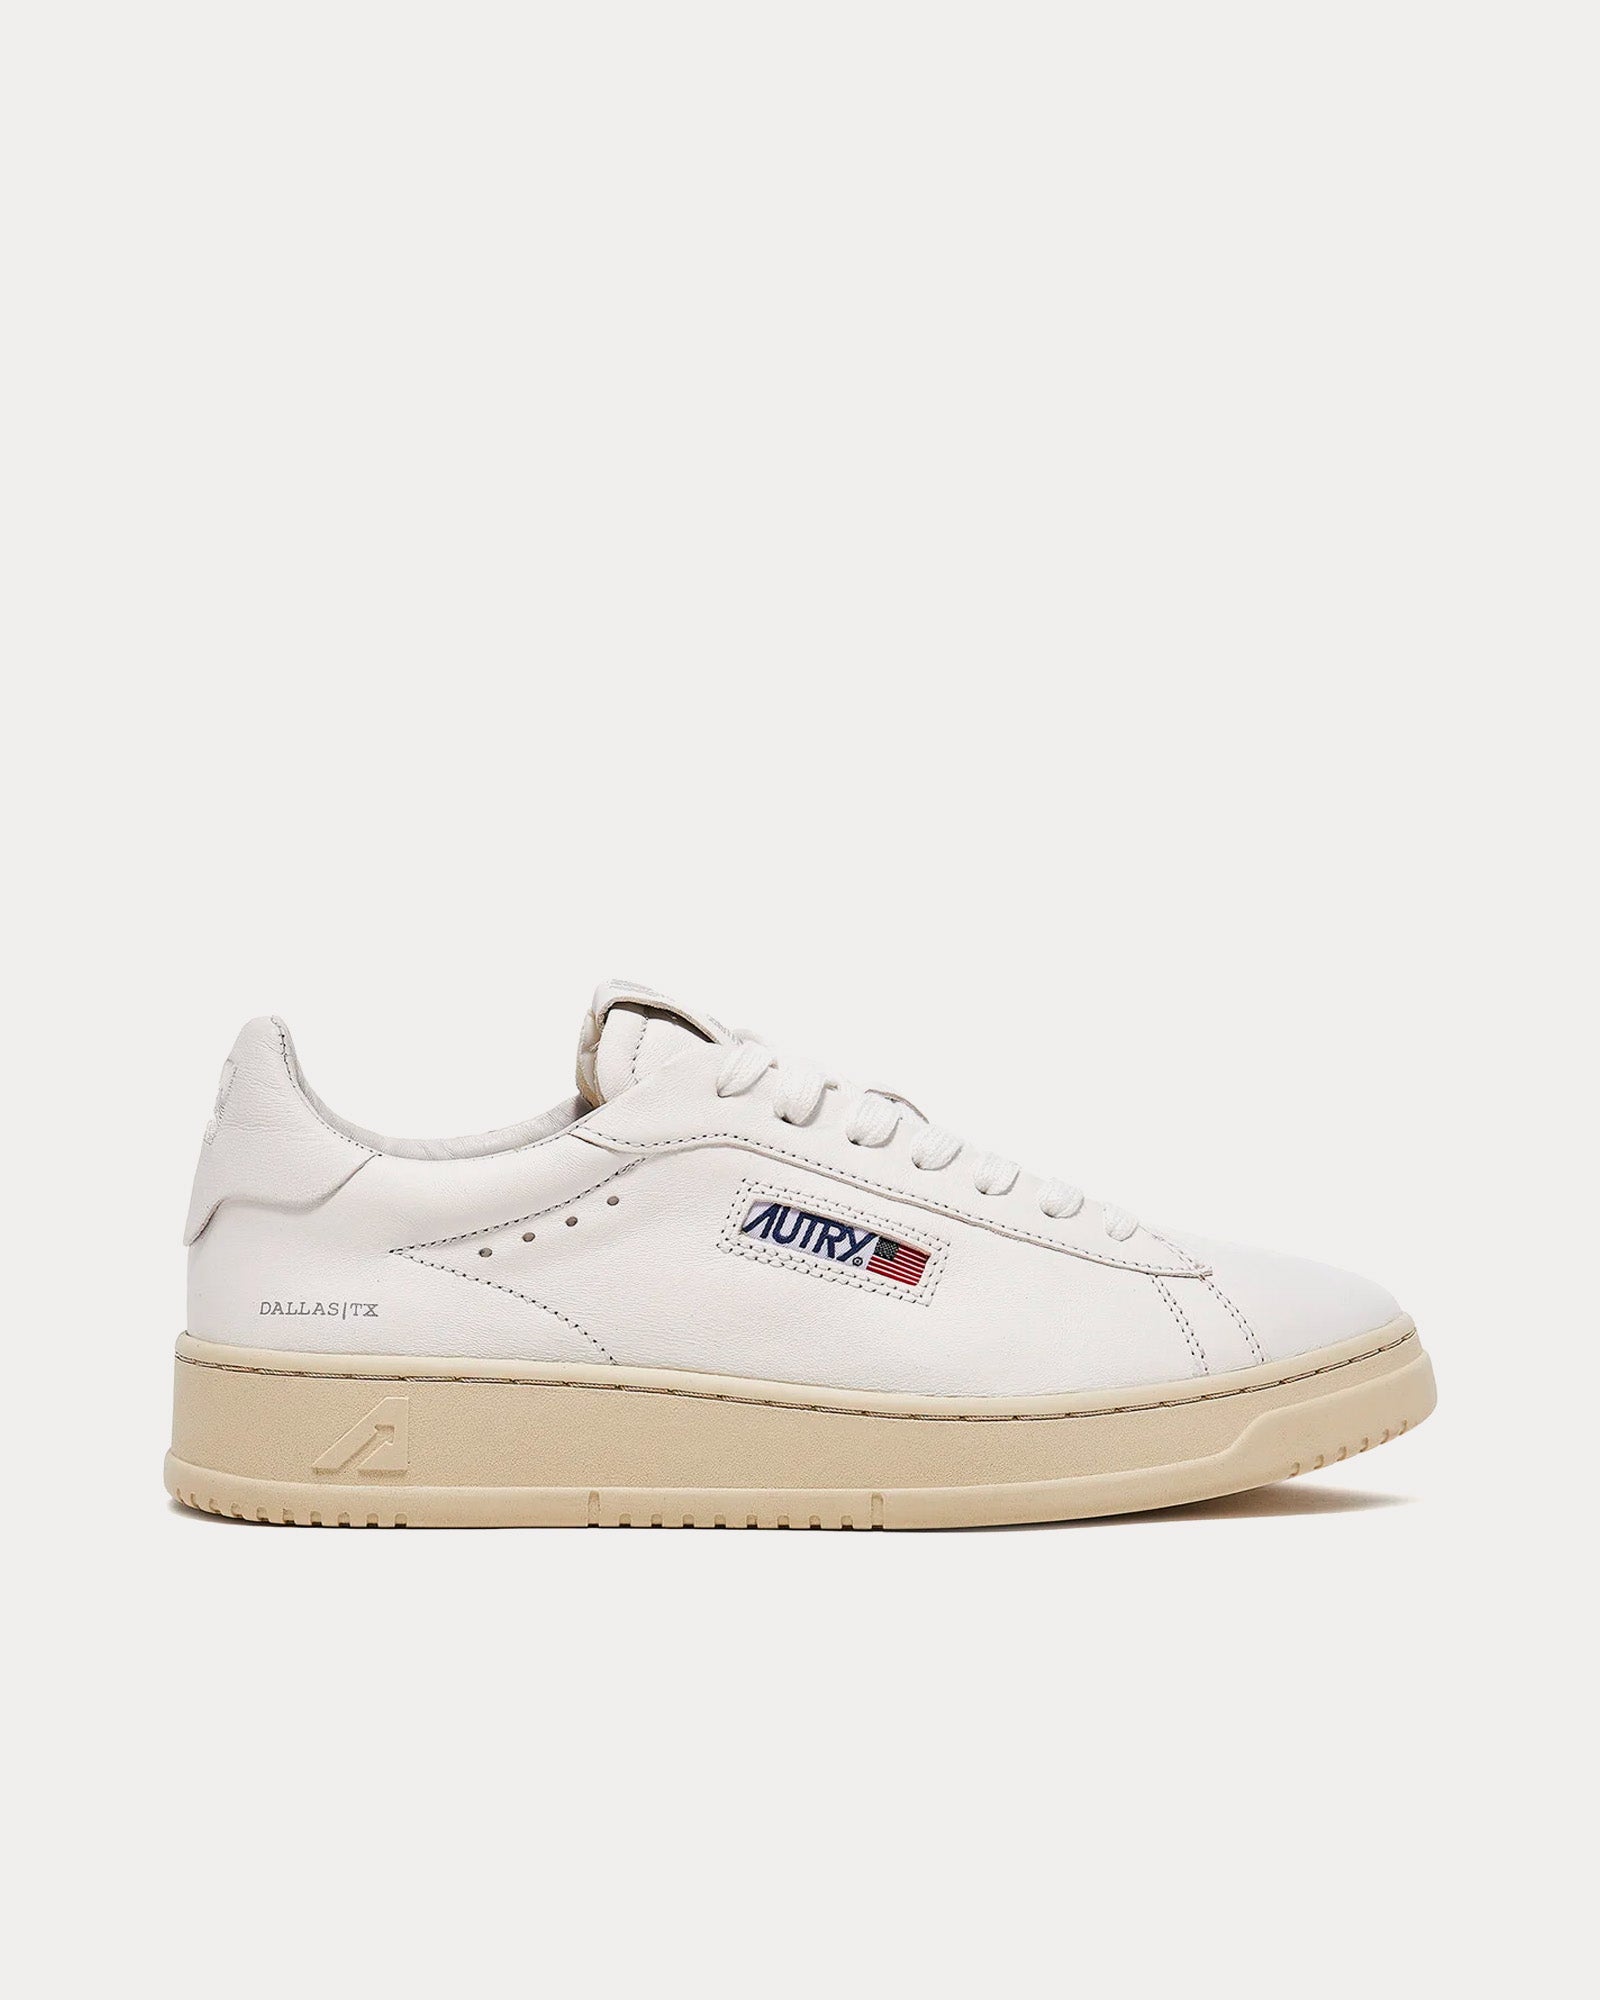 Autry - Dallas Goatskin White Low Top Sneakers